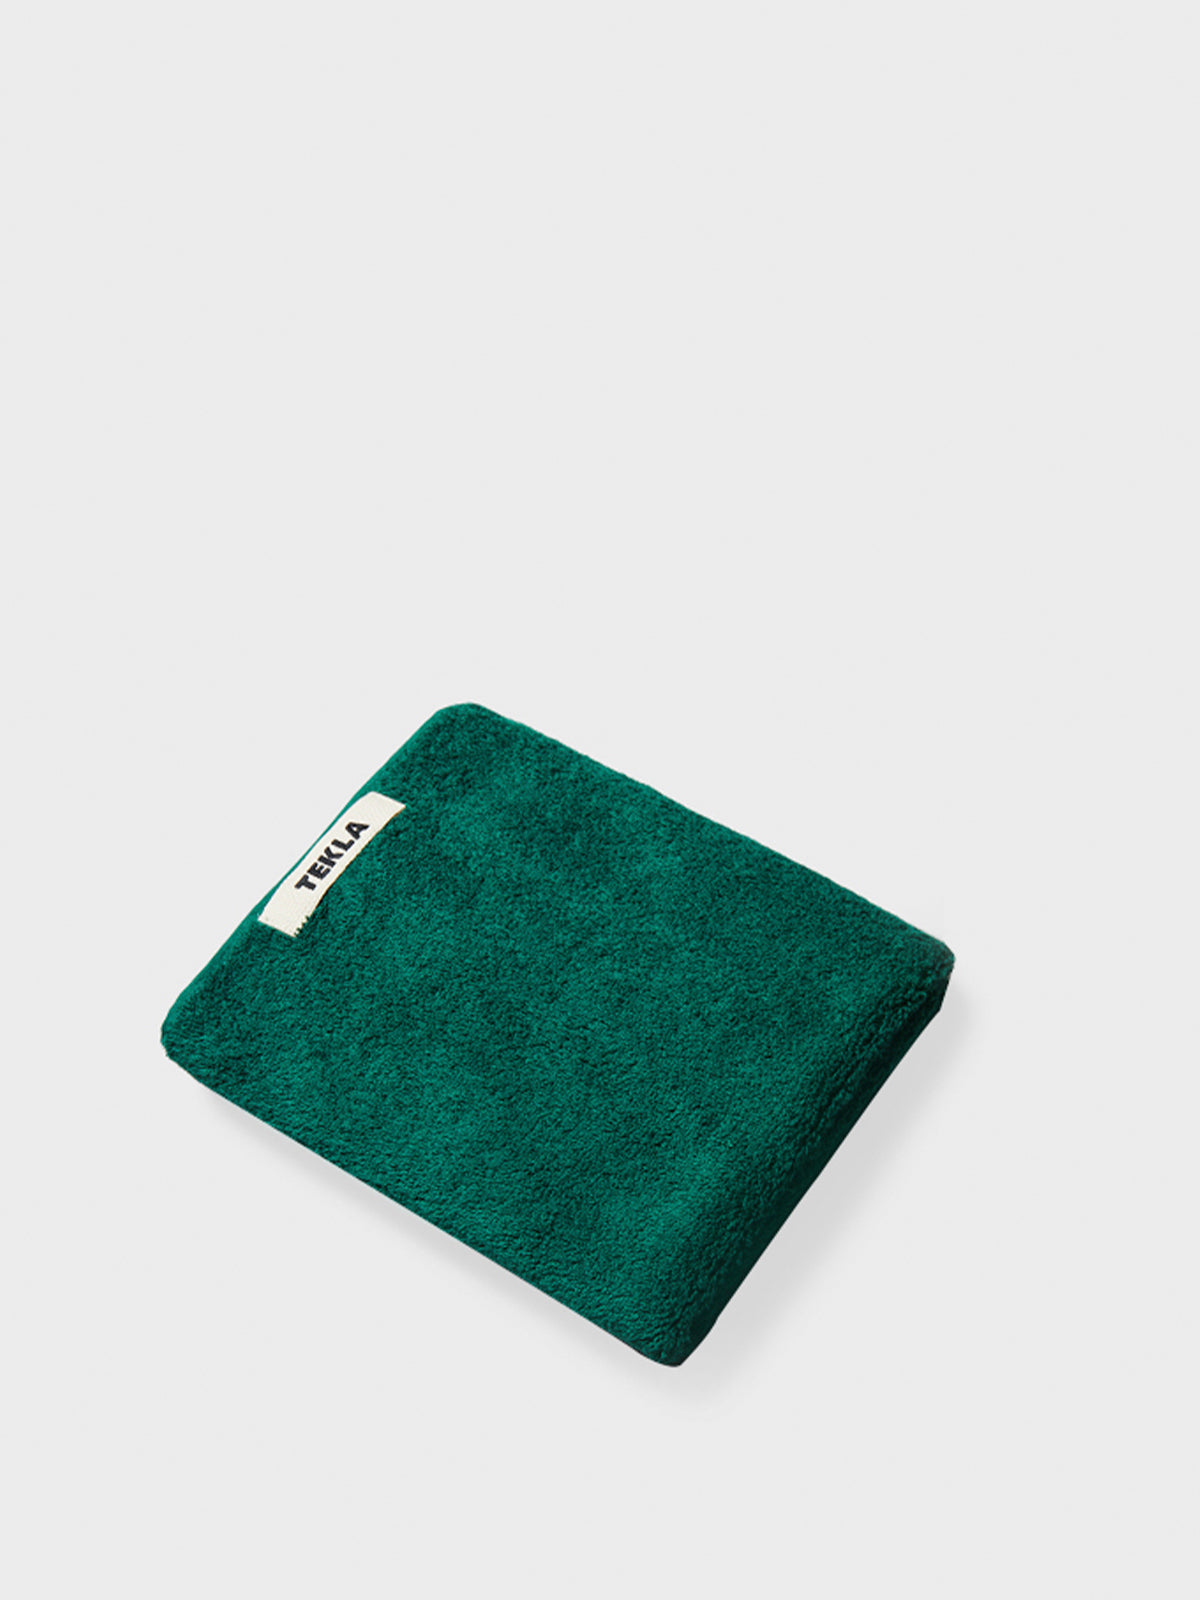 Tekla - Hand Towel in Teal Green